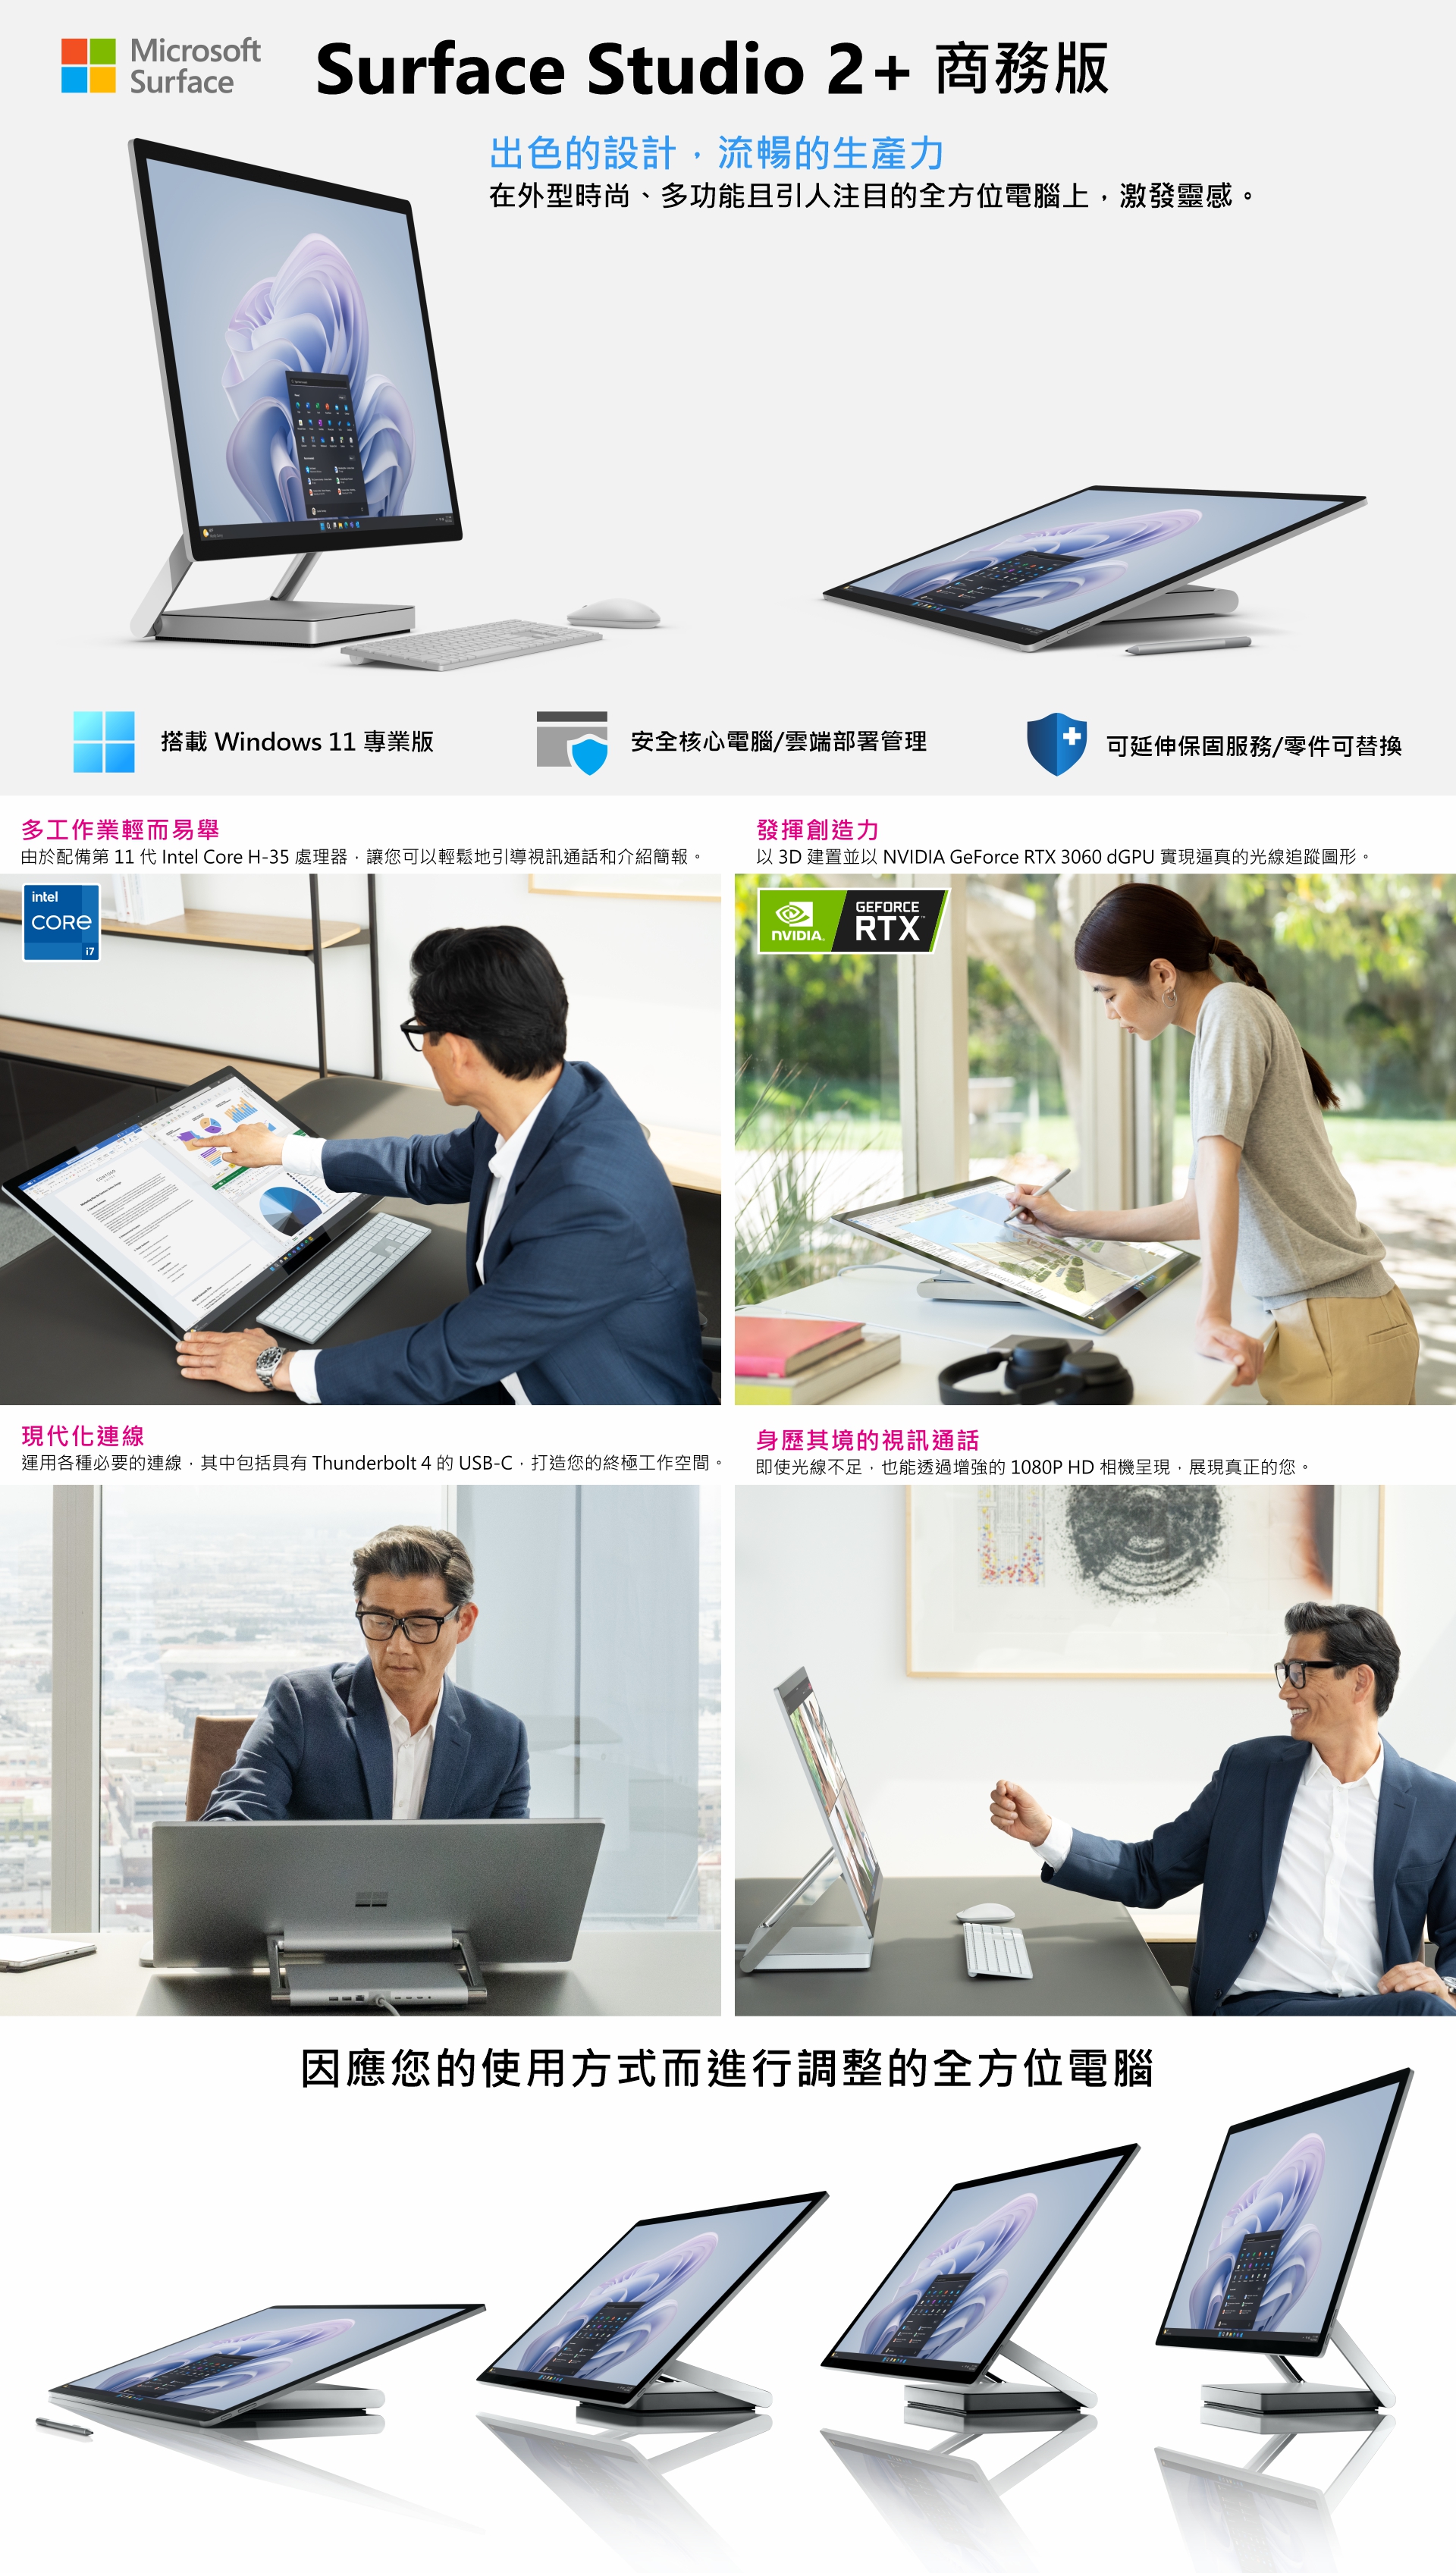 Surface Studio 2+ 簡介